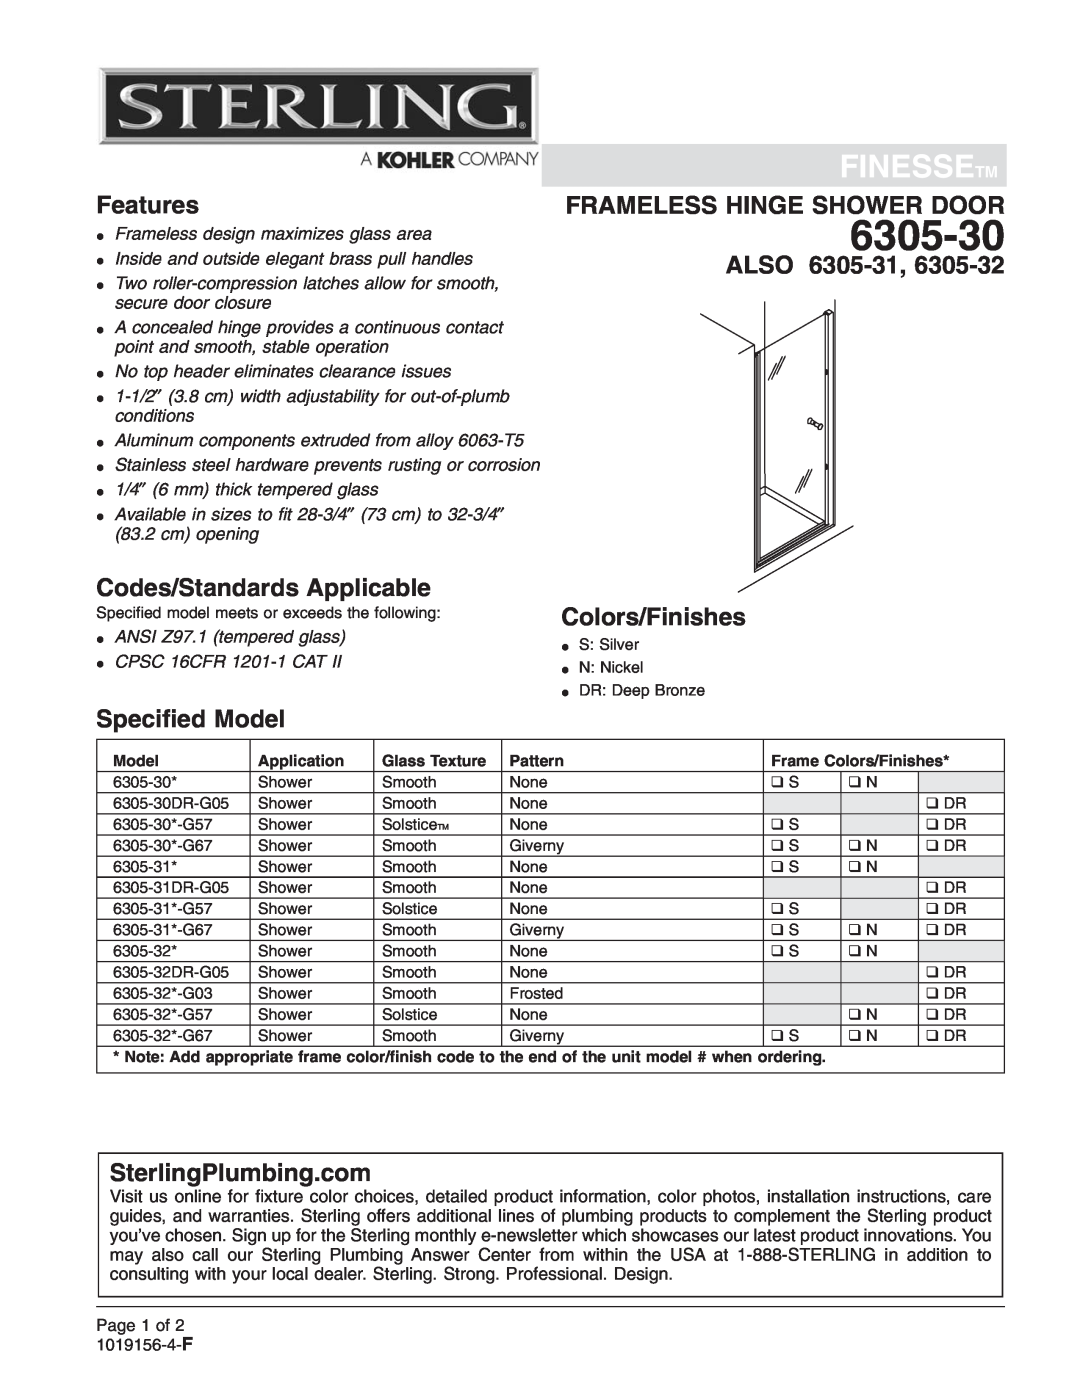 Sterling Plumbing 6305-30 installation instructions Finessetm, Features, Frameless Hinge Shower Door, Also, Speciﬁed Model 